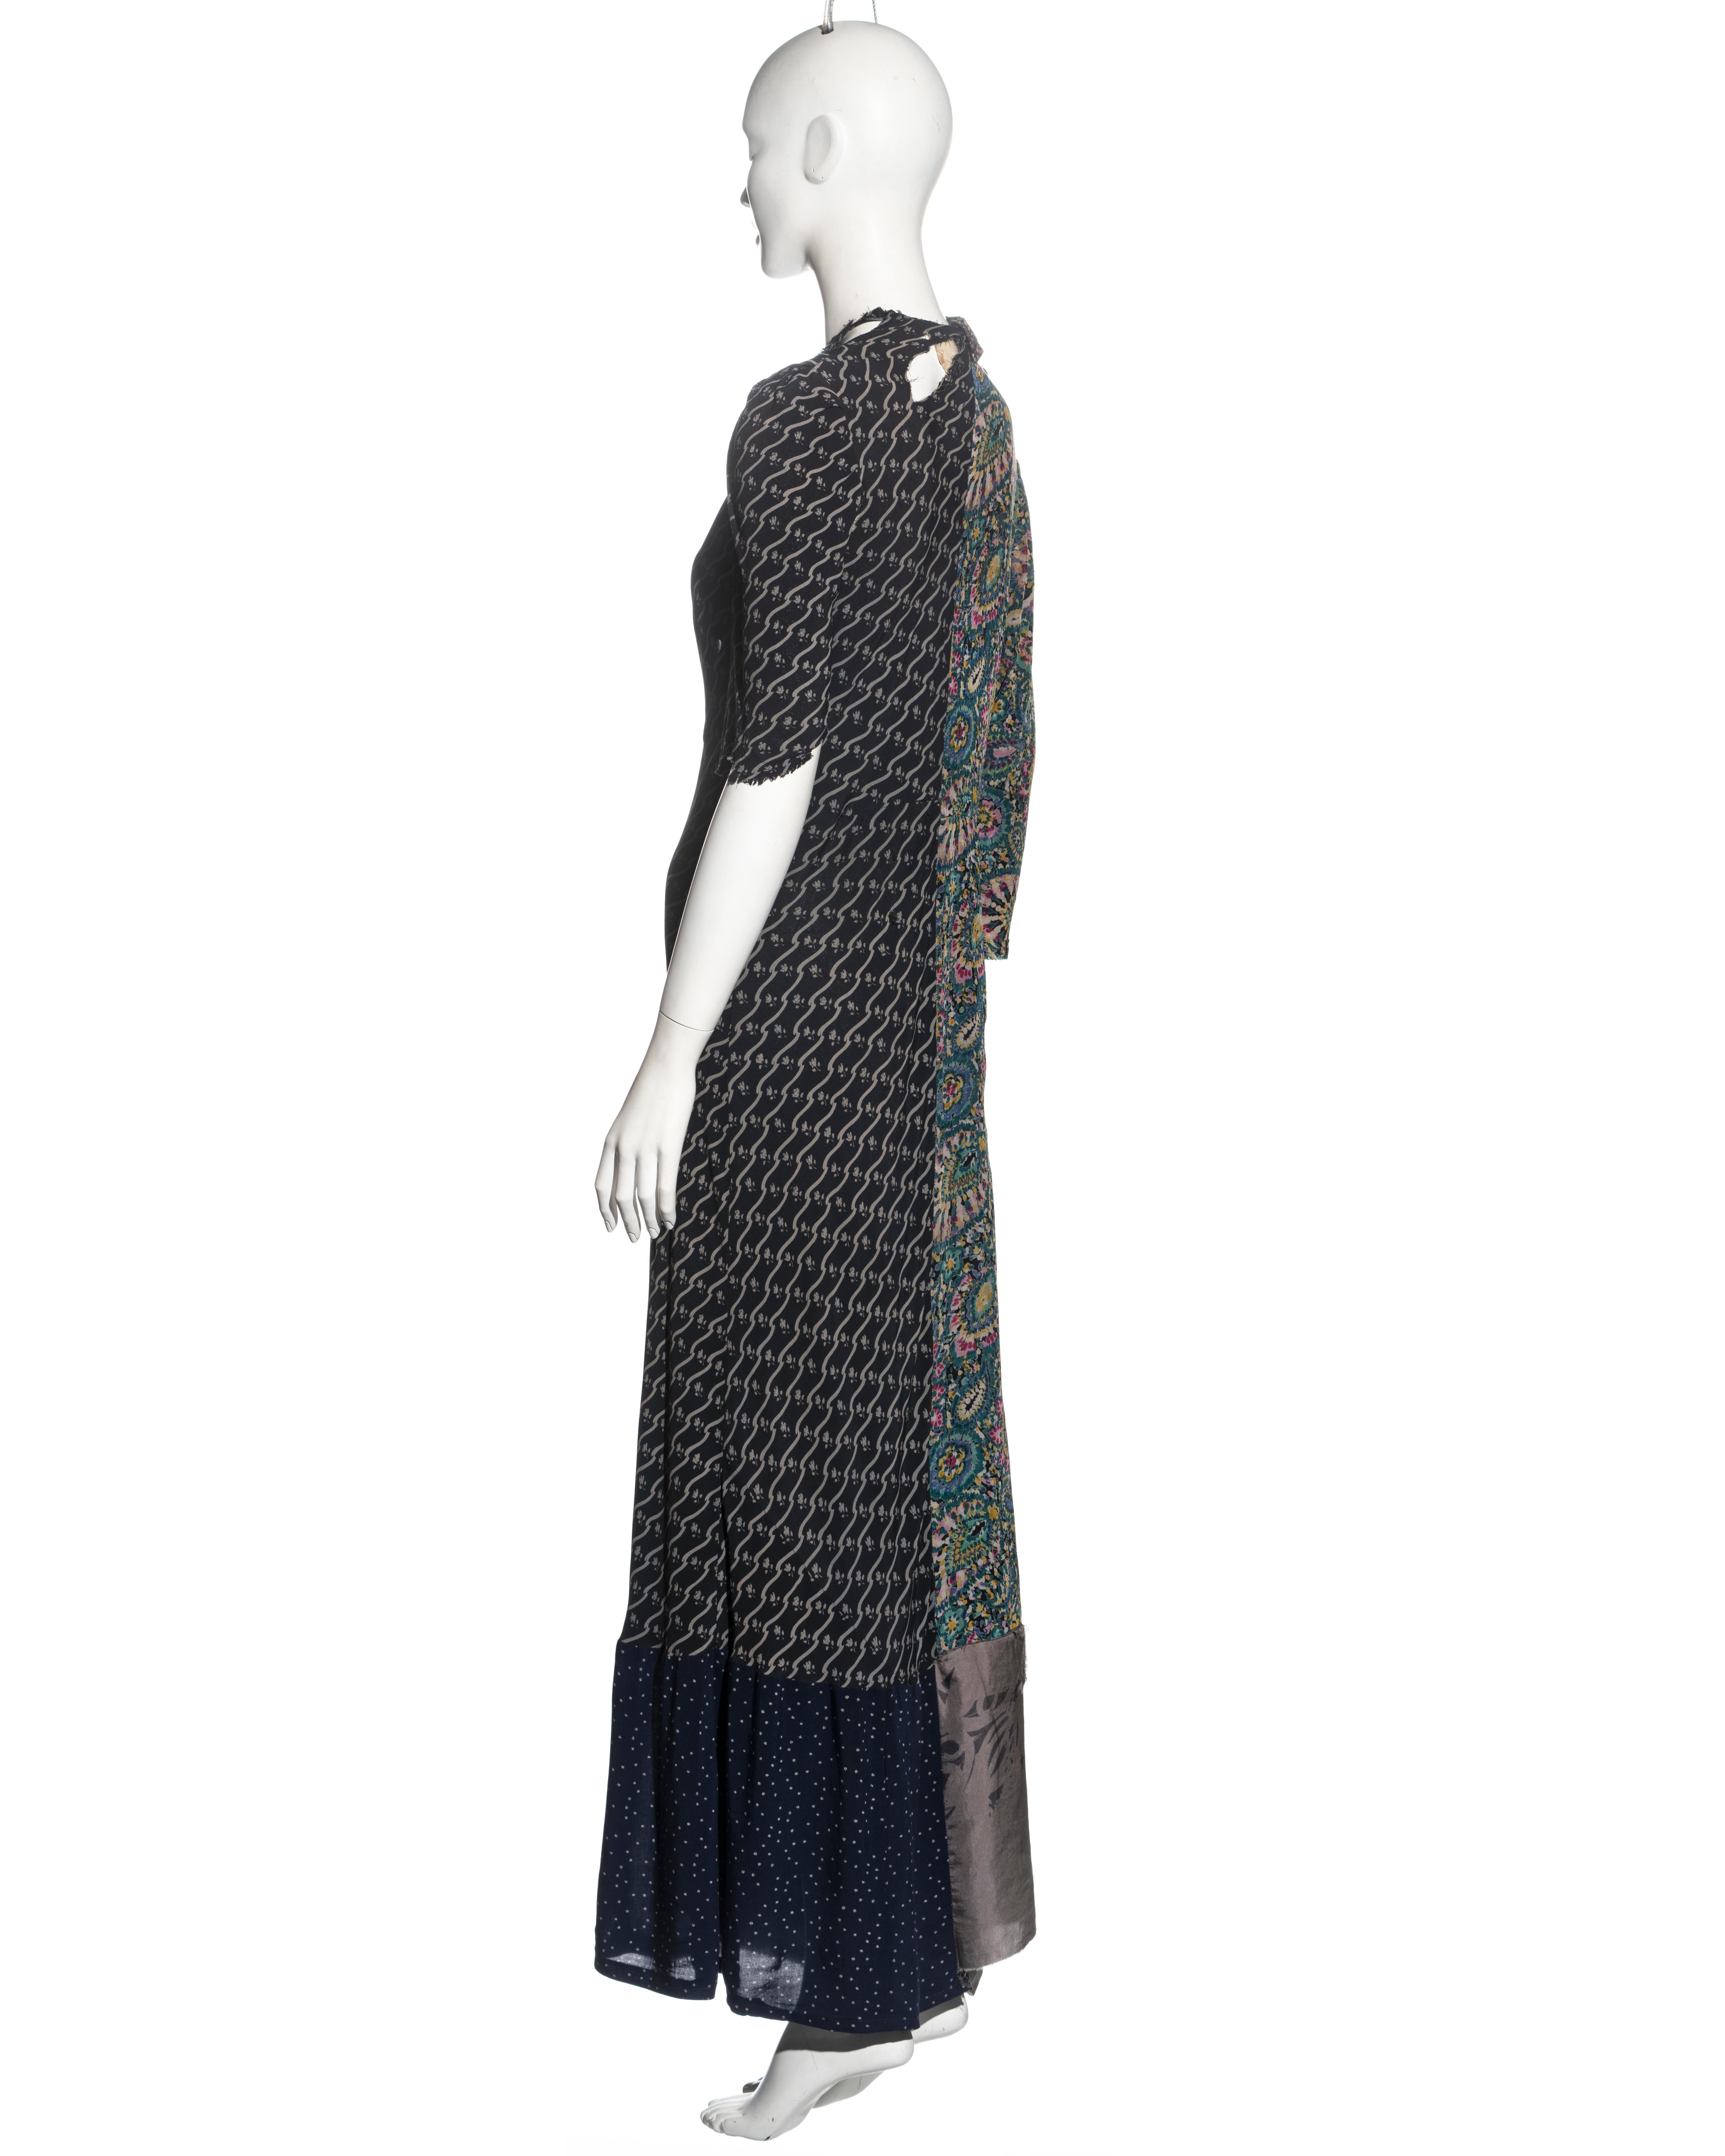 Martin Margiela artisanal dress made from reclaimed vintage dresses, fw 1993 For Sale 2